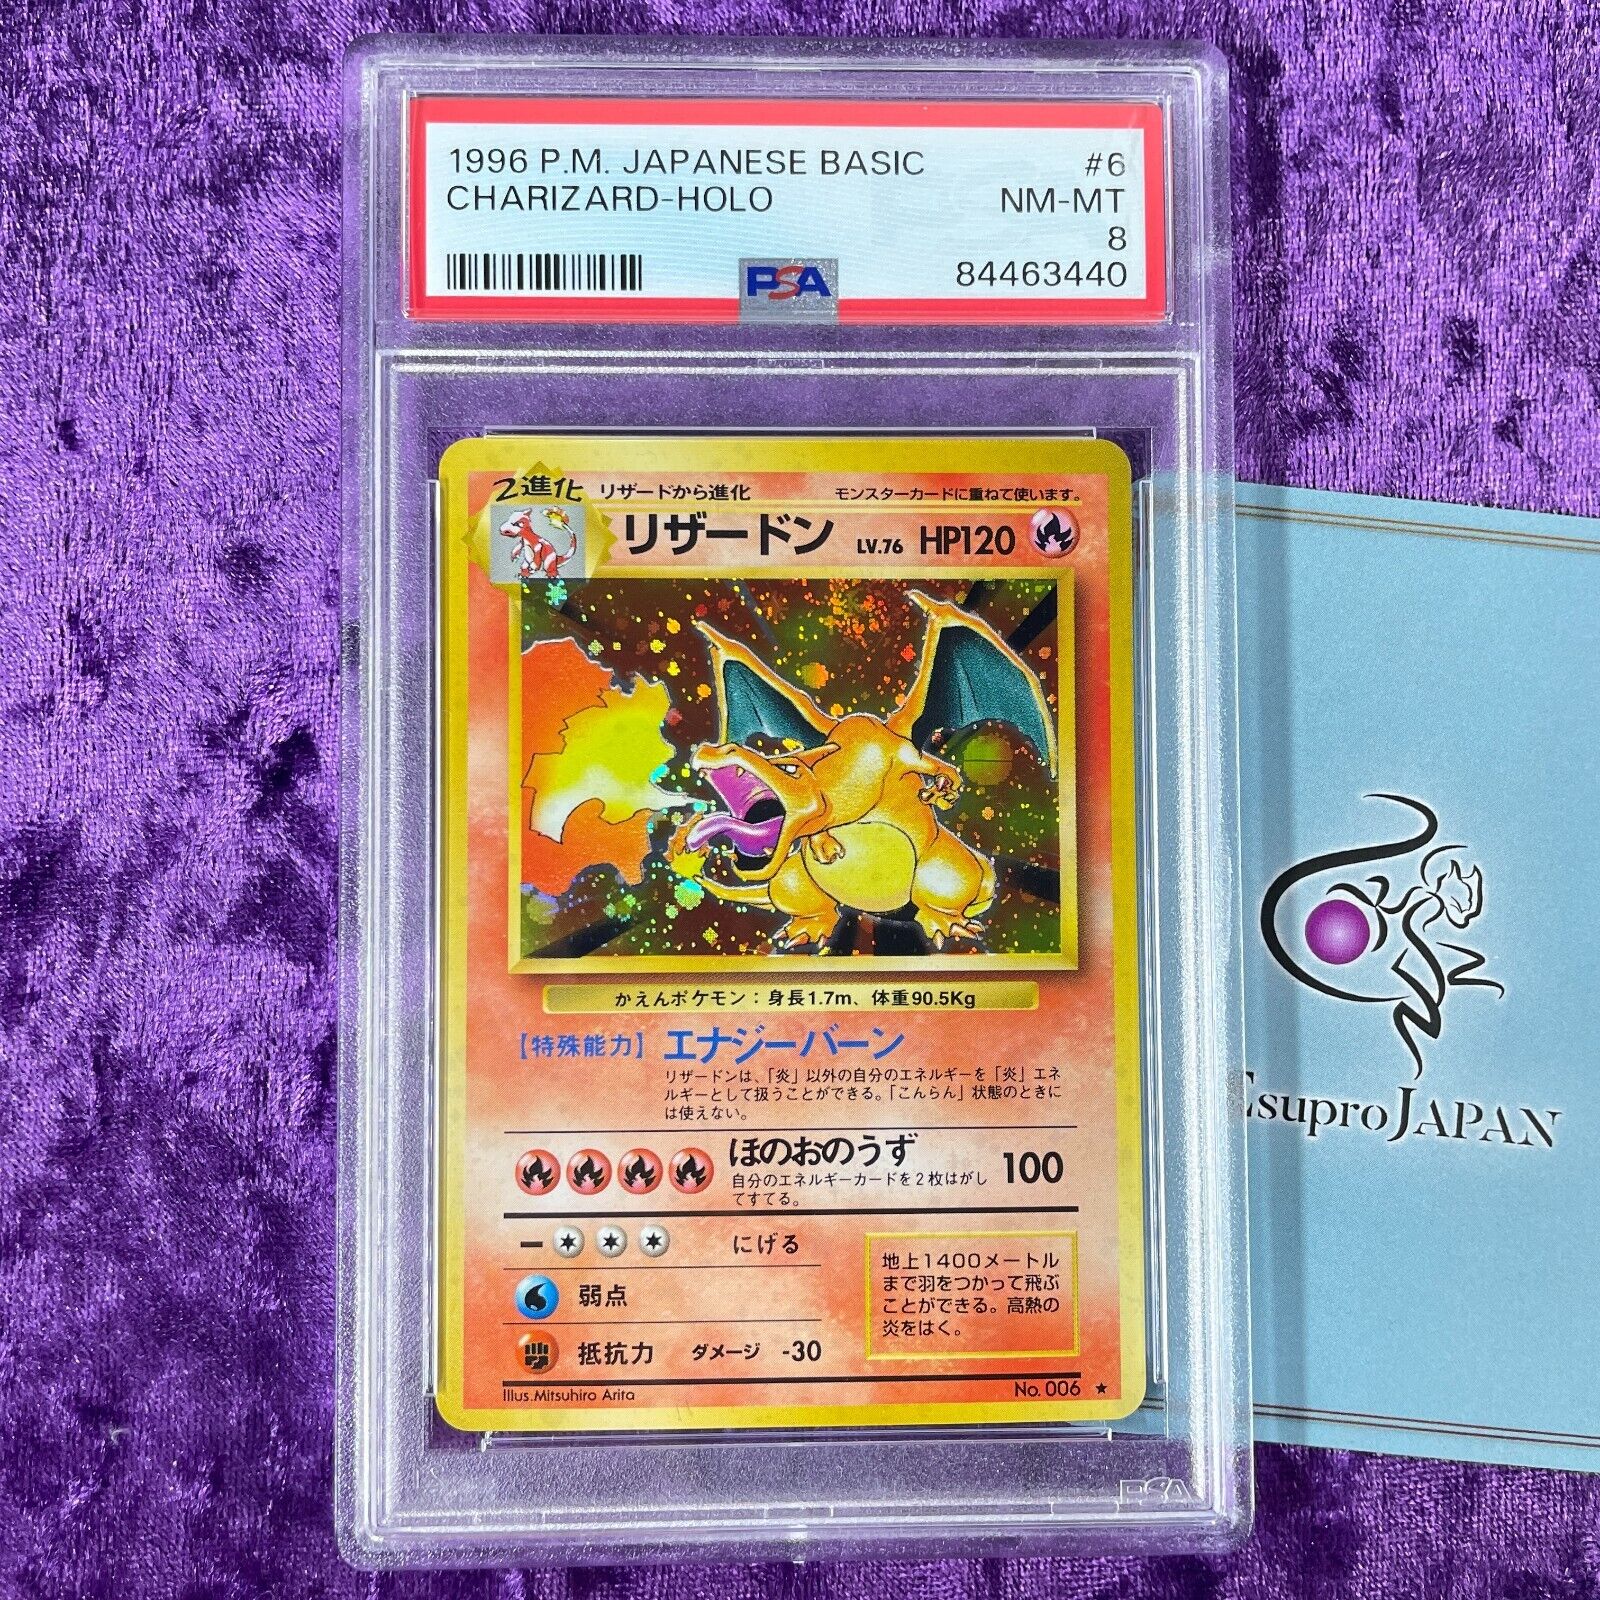 PSA 8 1996 Charizard Holo #006 Pokemon Card Japanese Basic Vintage TCG Graded